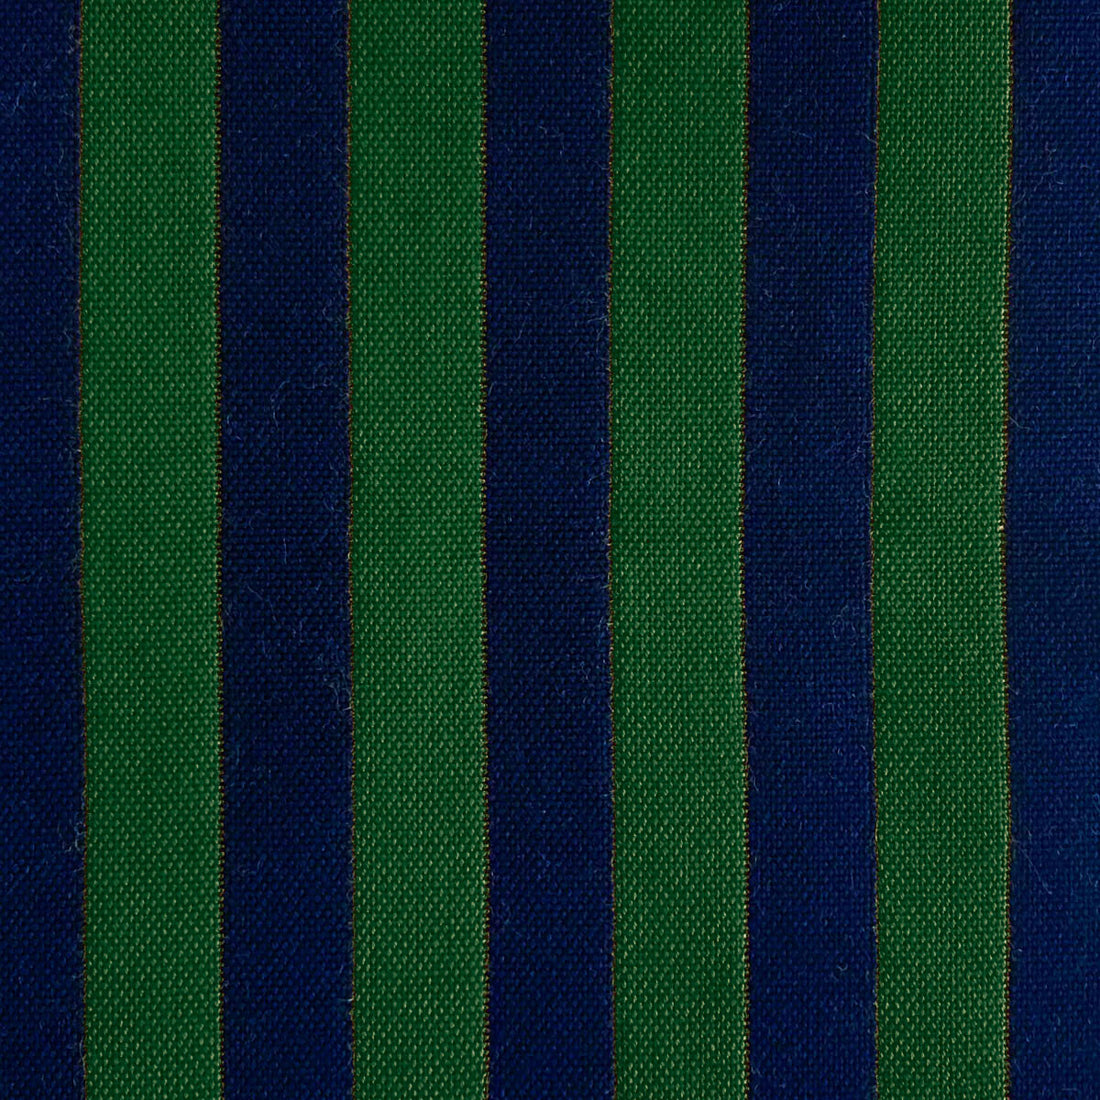 Benjamin fabric in navy/verde color - pattern LCT1057.005.0 - by Gaston y Daniela in the Lorenzo Castillo VI collection